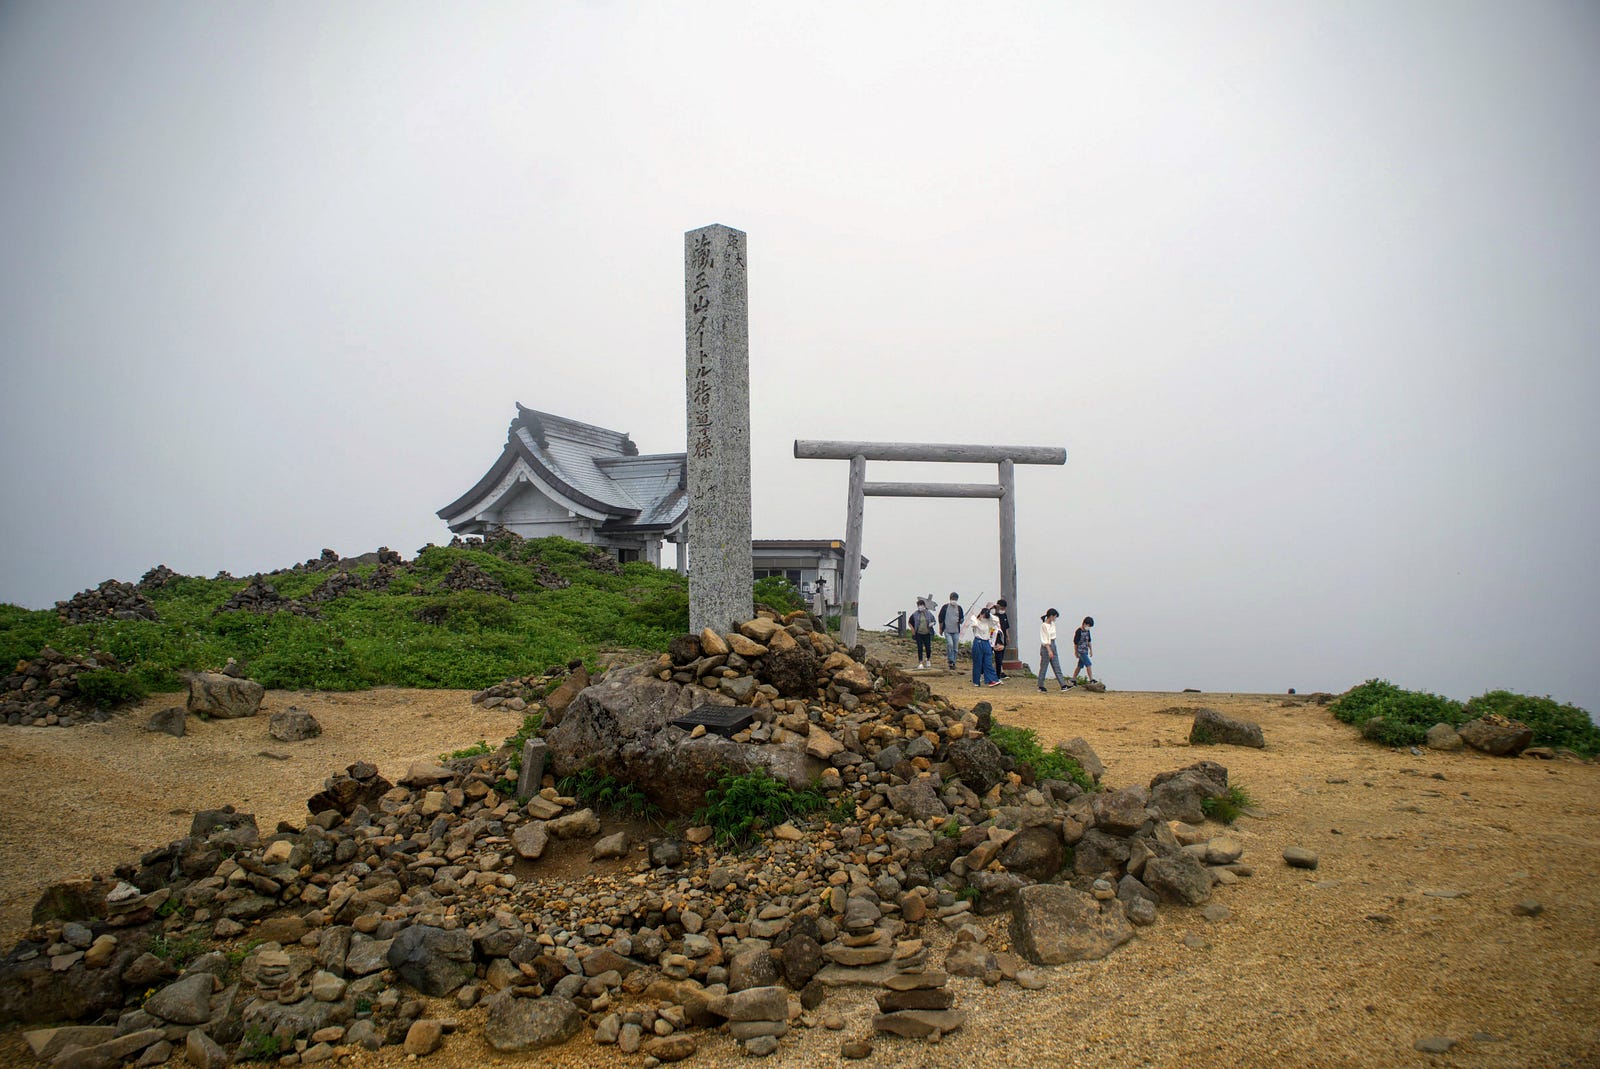 Katta-mine Jinja (shrine) on Katta-dake, Zao-san (Mt. Zao) with obelisk in the foreground, and building with torii gates in the background.